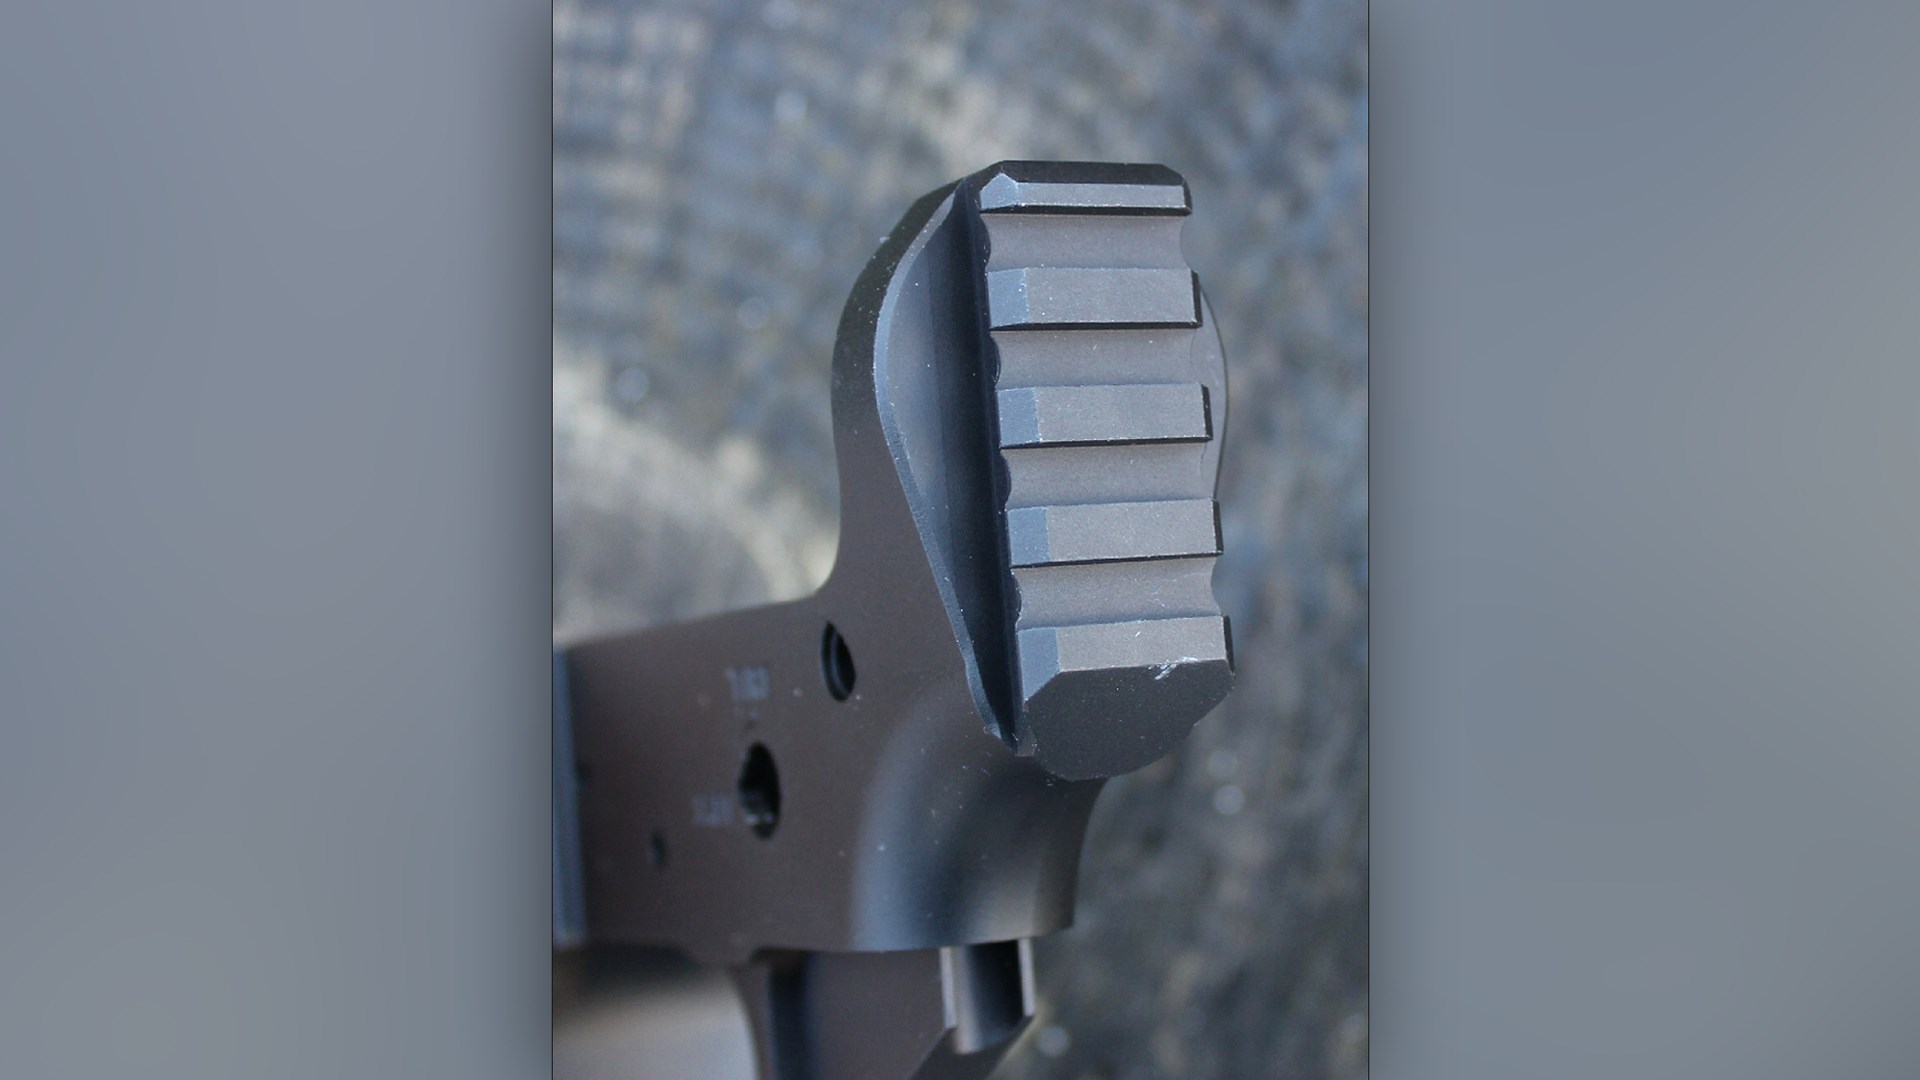 Brownells BRN-180 receiver black metal picatinny rail gun parts